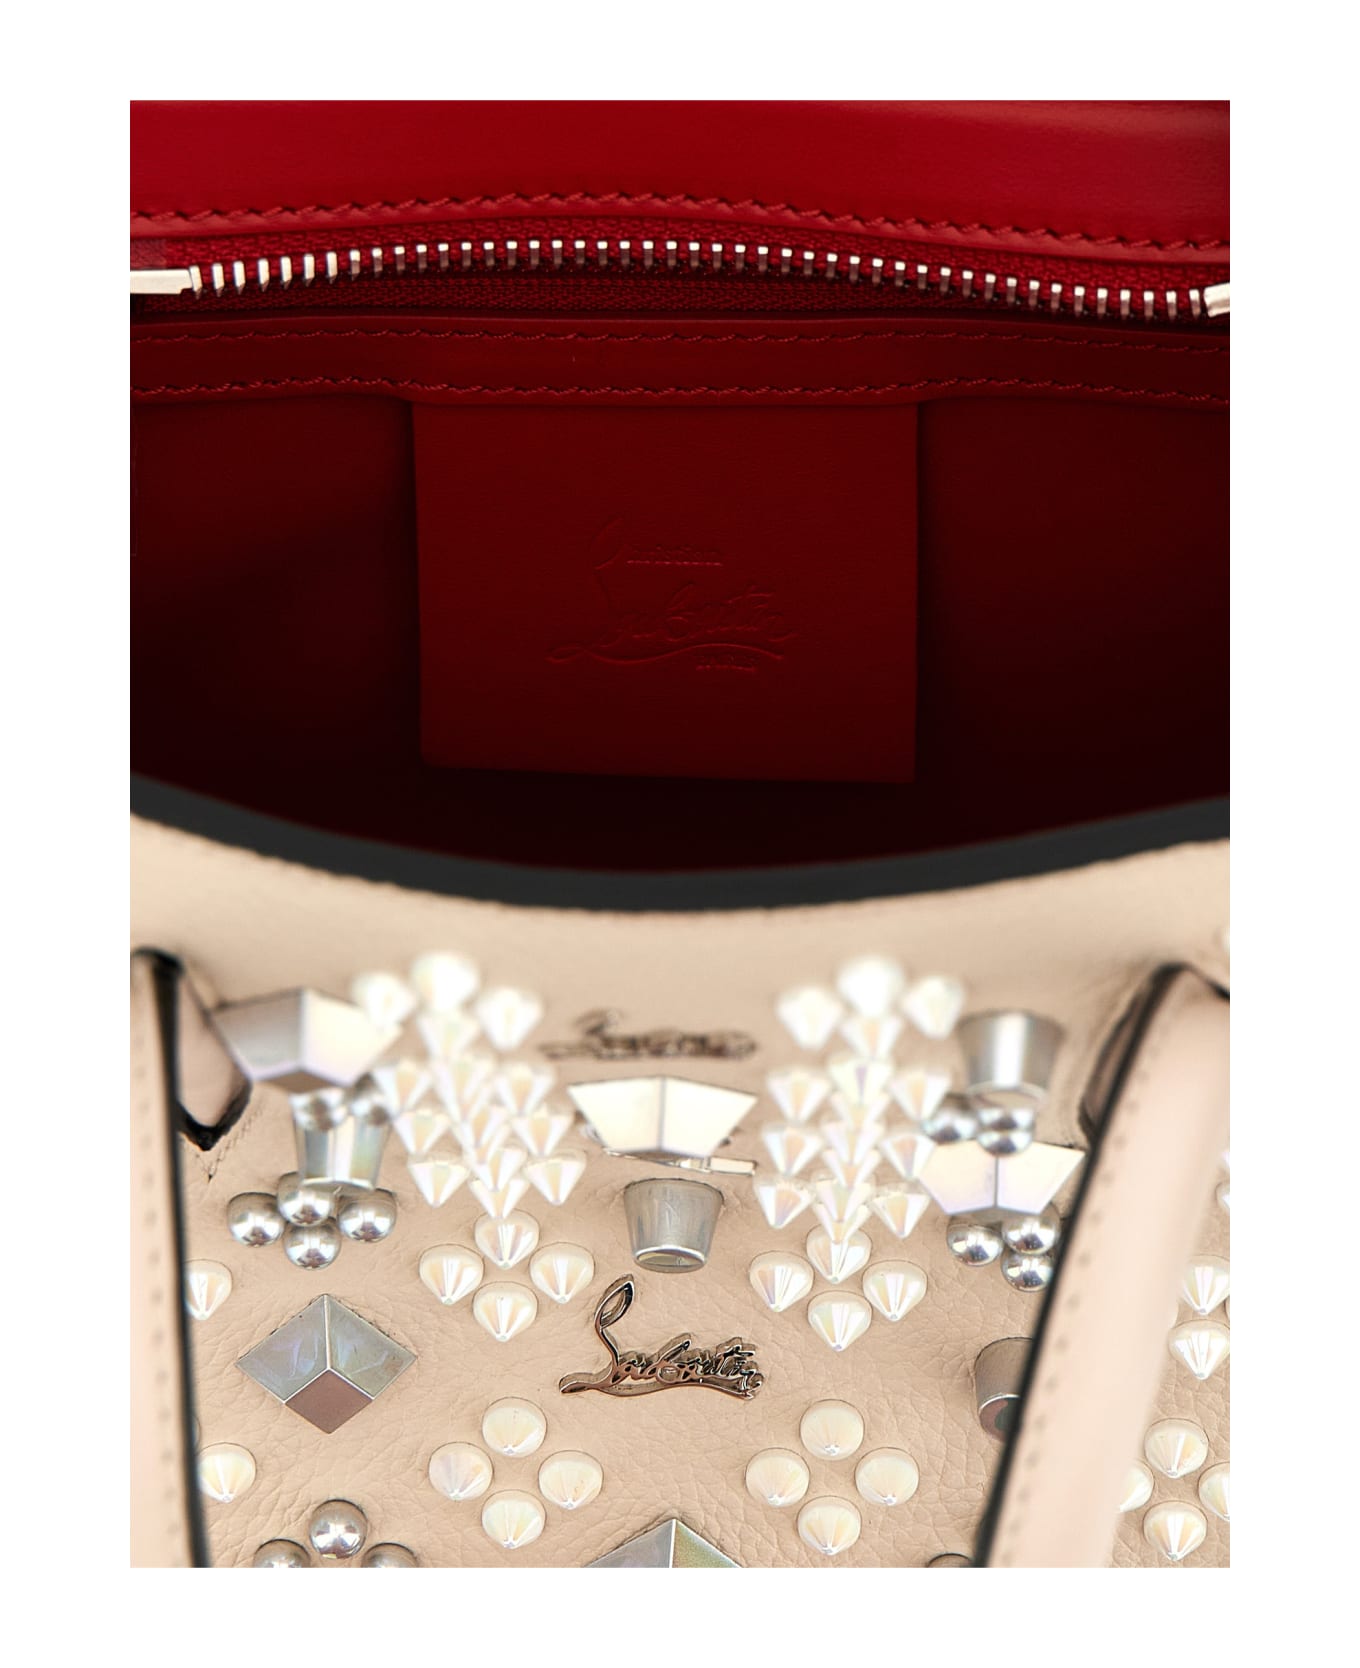 Christian Louboutin 'paloma' Mini Handbag - Beige